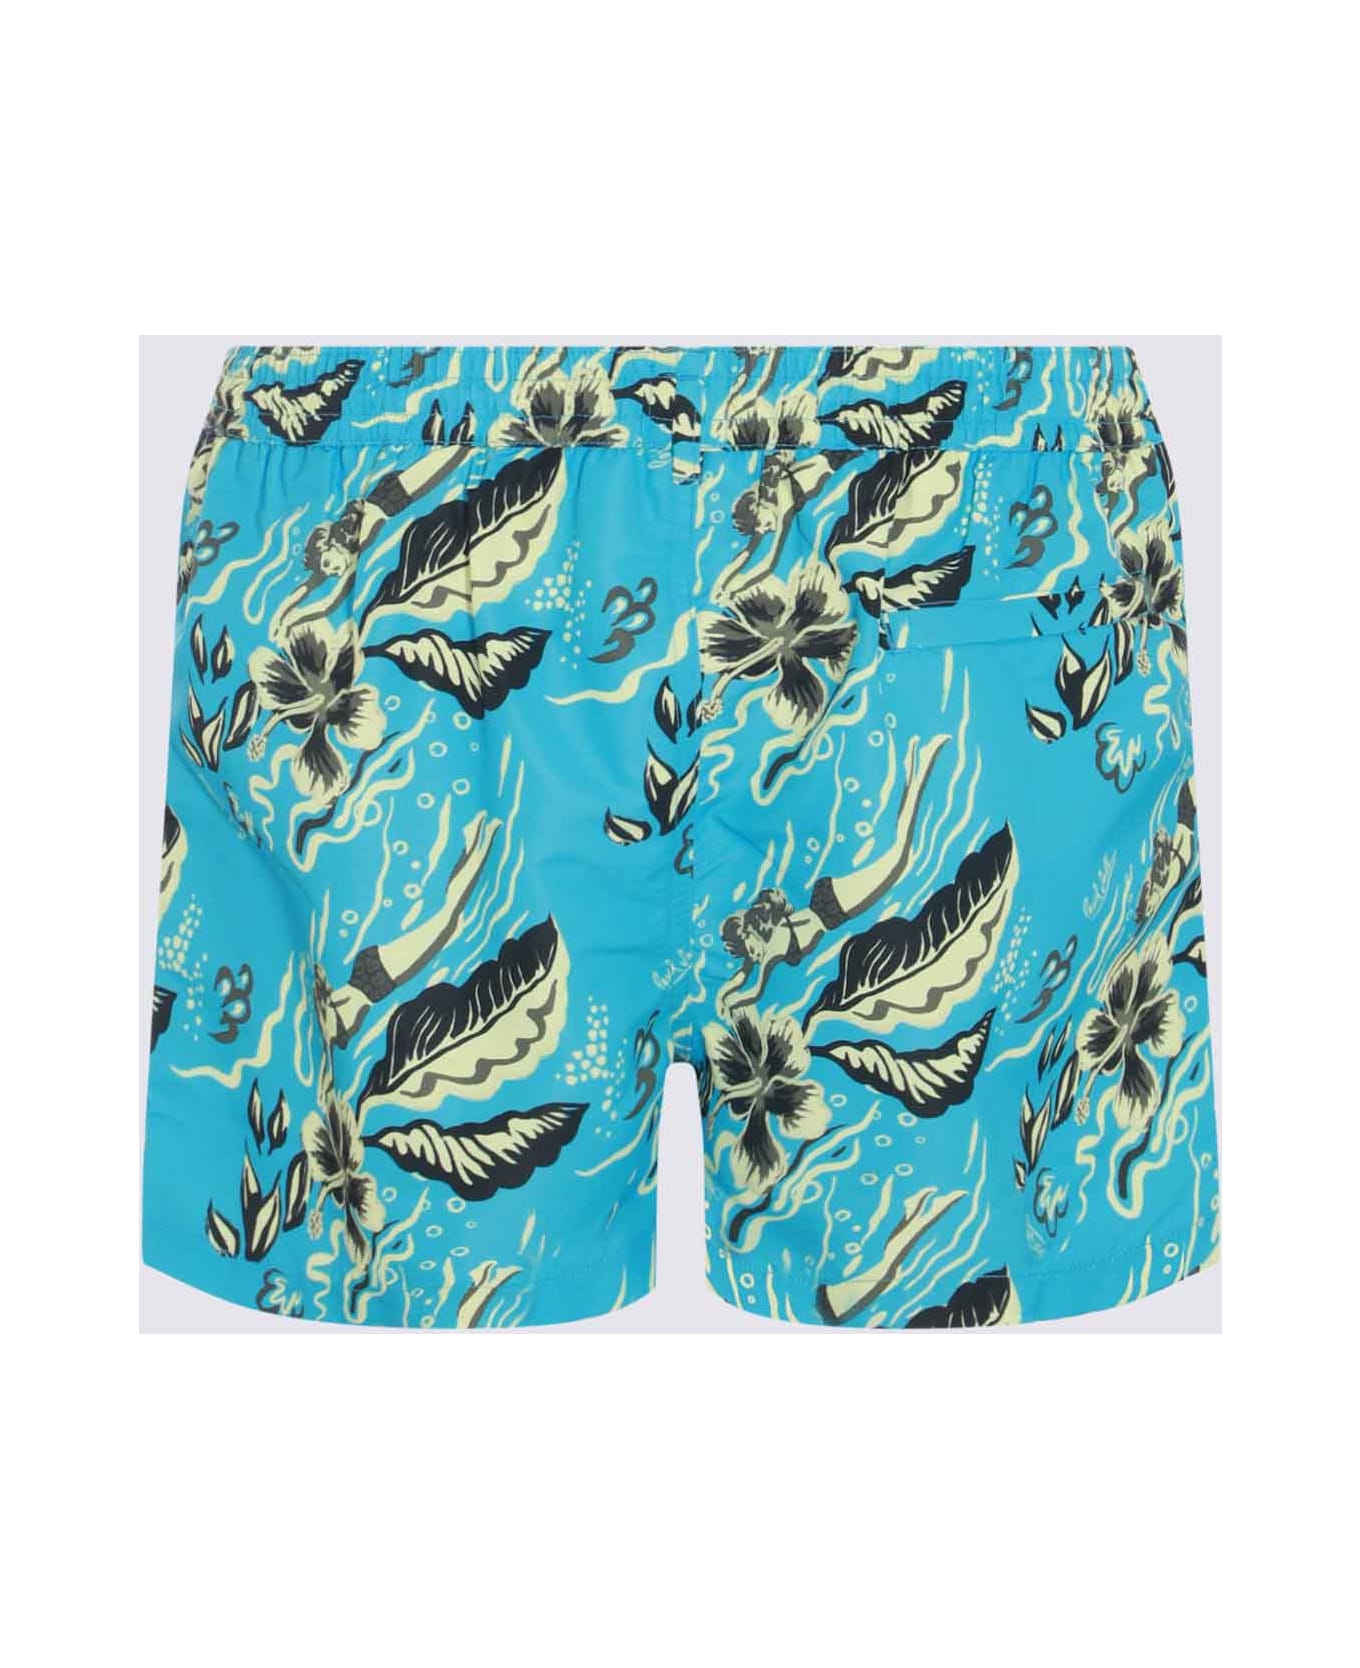 Paul Smith Light Blue Multicolour Swim Shorts - Blue 水着